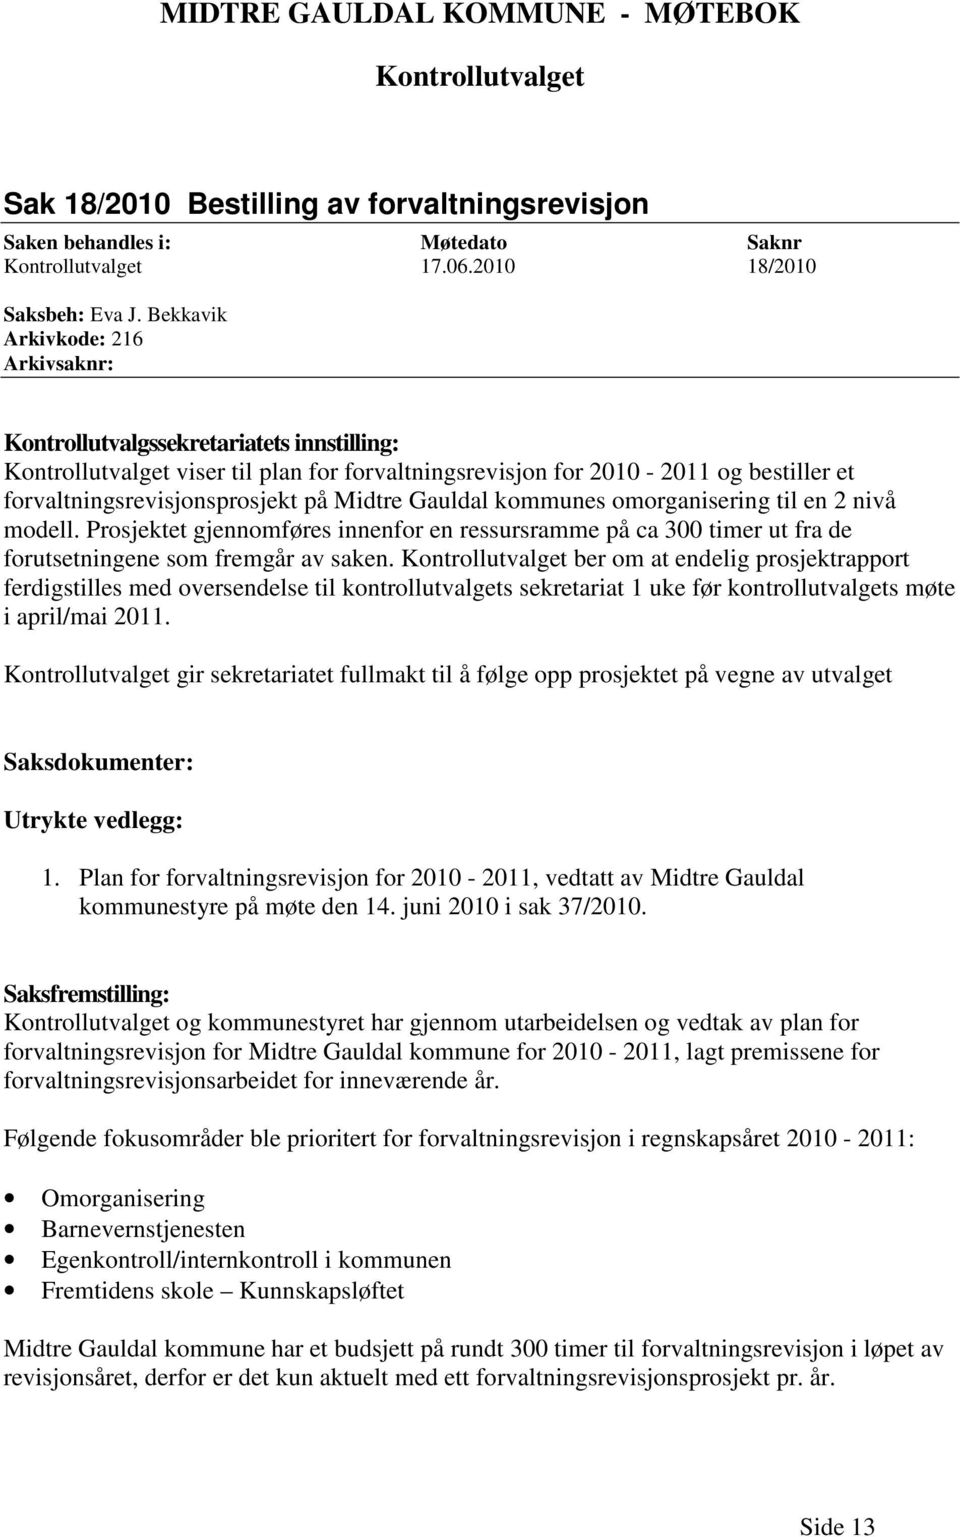 MØTEINNKALLING MIDTRE GAULDAL KOMMUNE KONTROLLUTVALGET. : Kontrollutvalget Midtre  Gauldal kommune - PDF Free Download